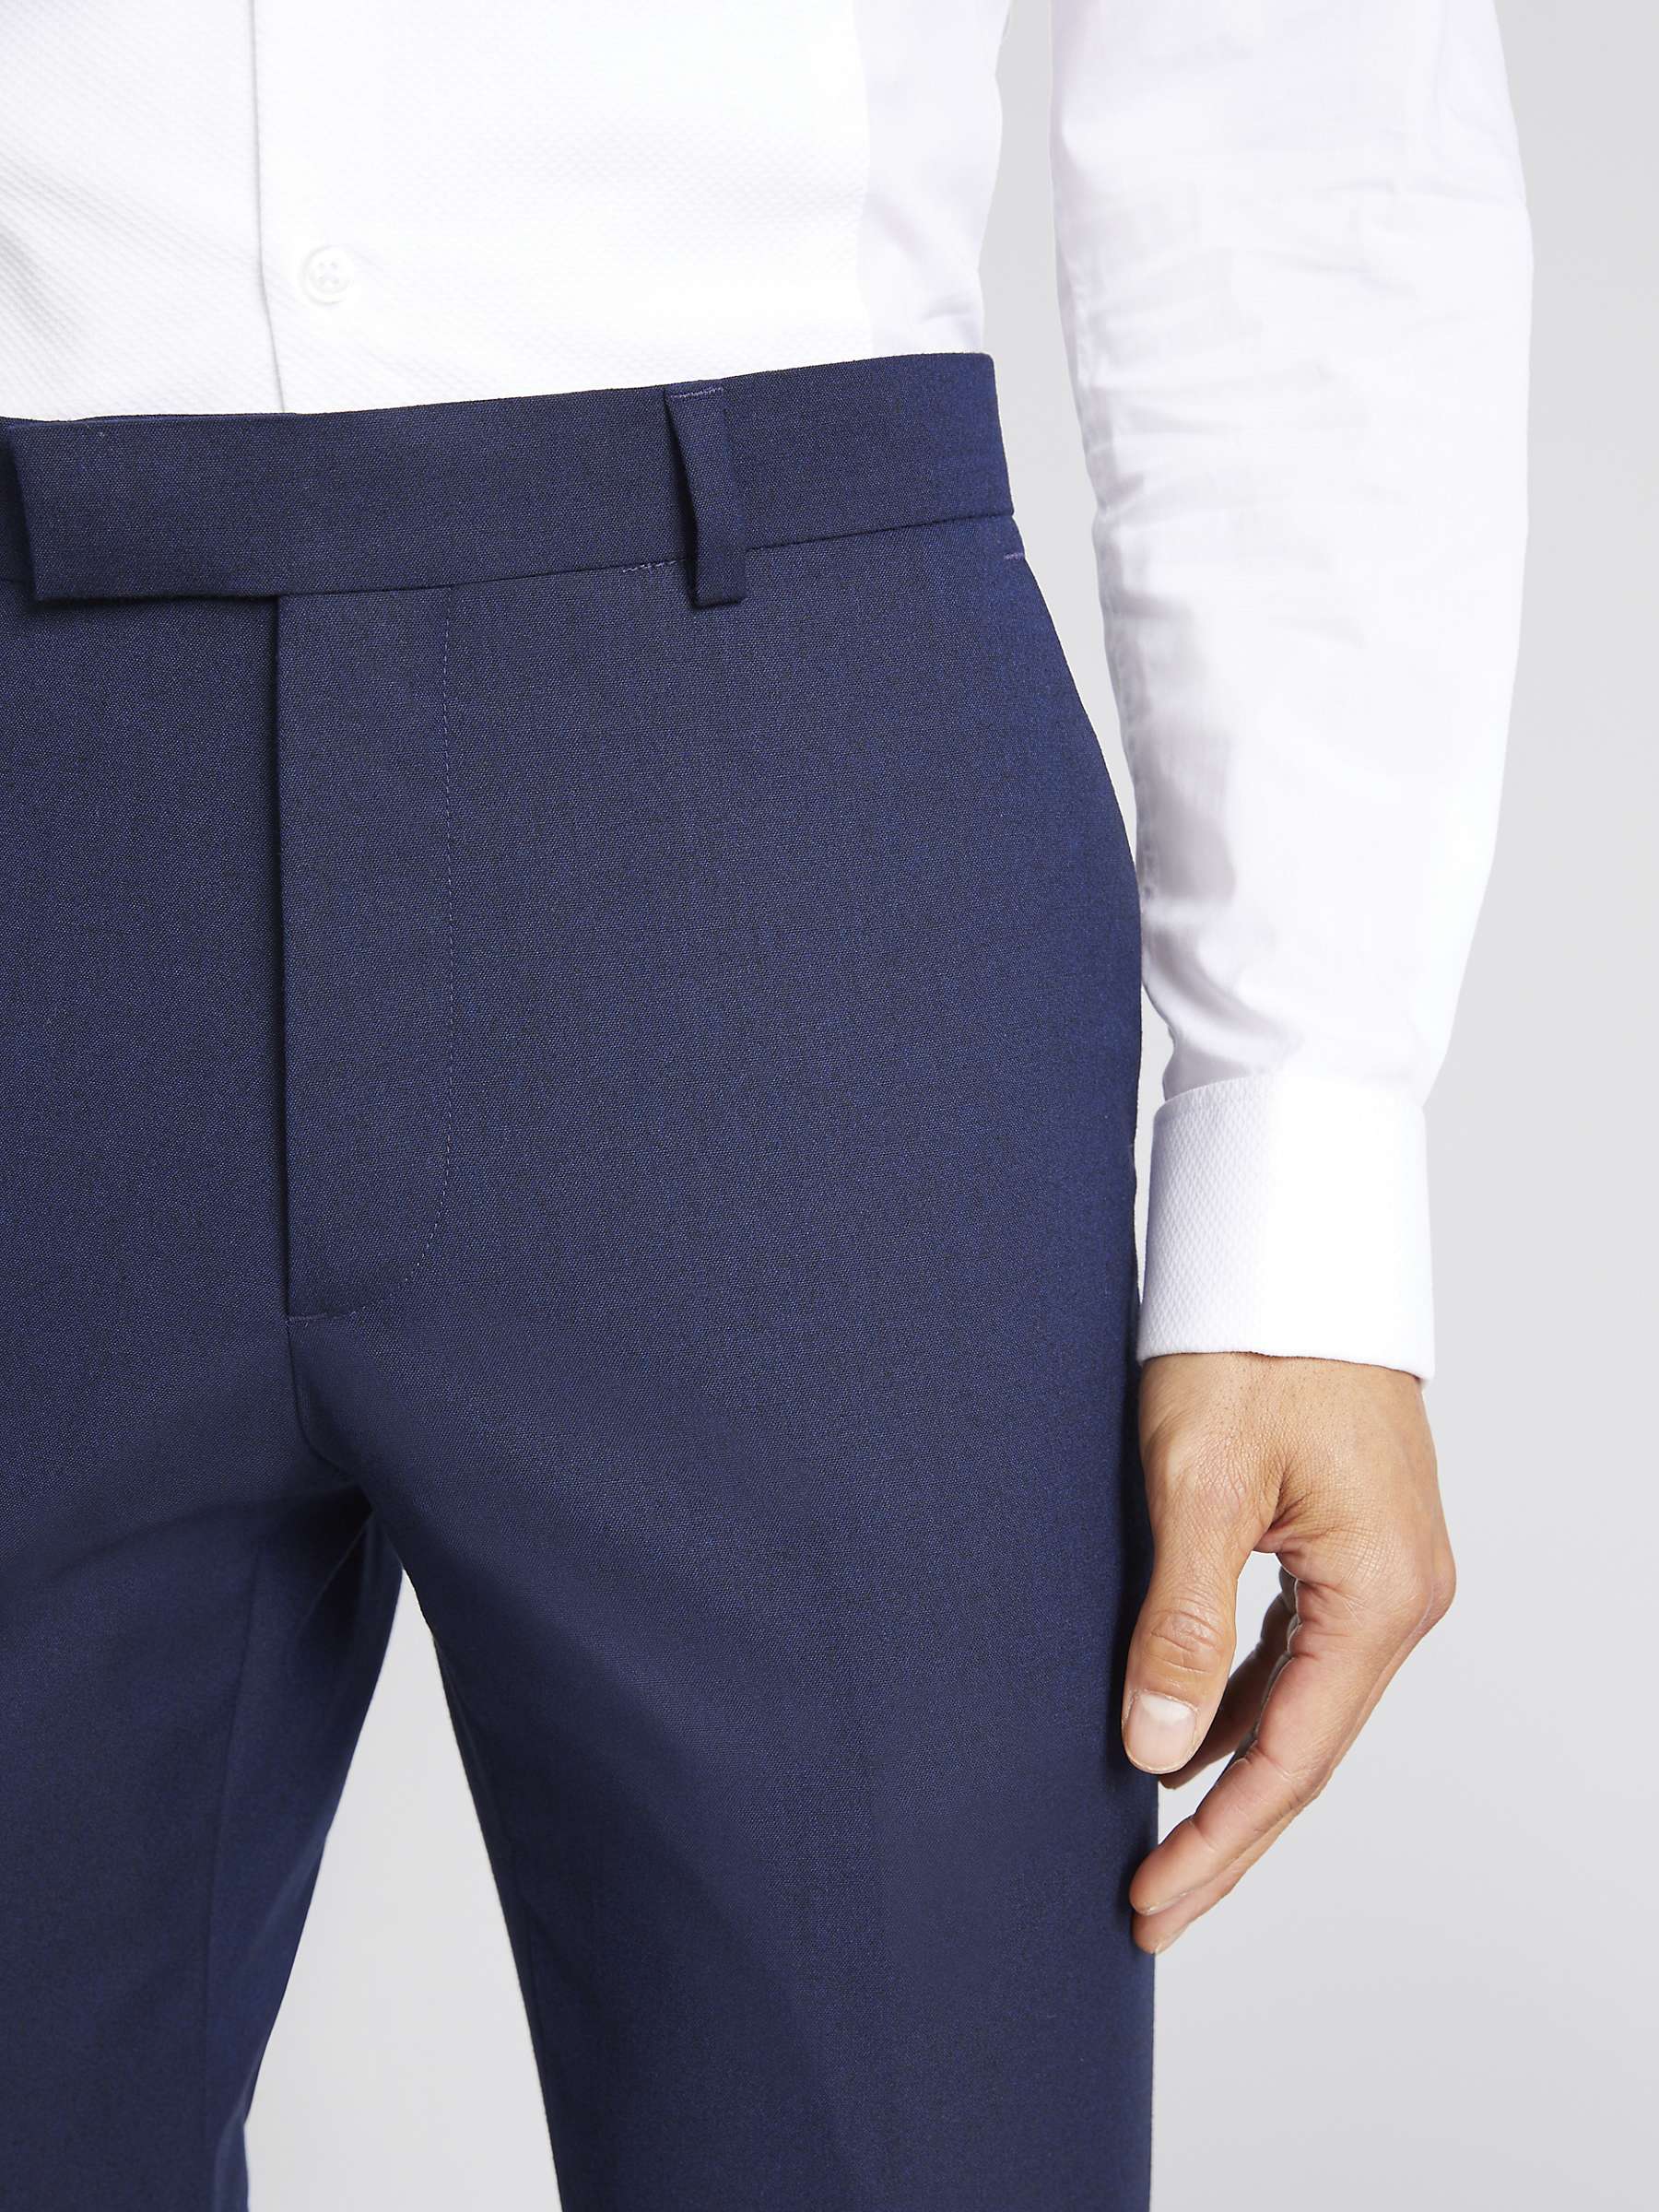 Buy Moss Slim Fit Dresswear Suit Trousers, Navy Online at johnlewis.com